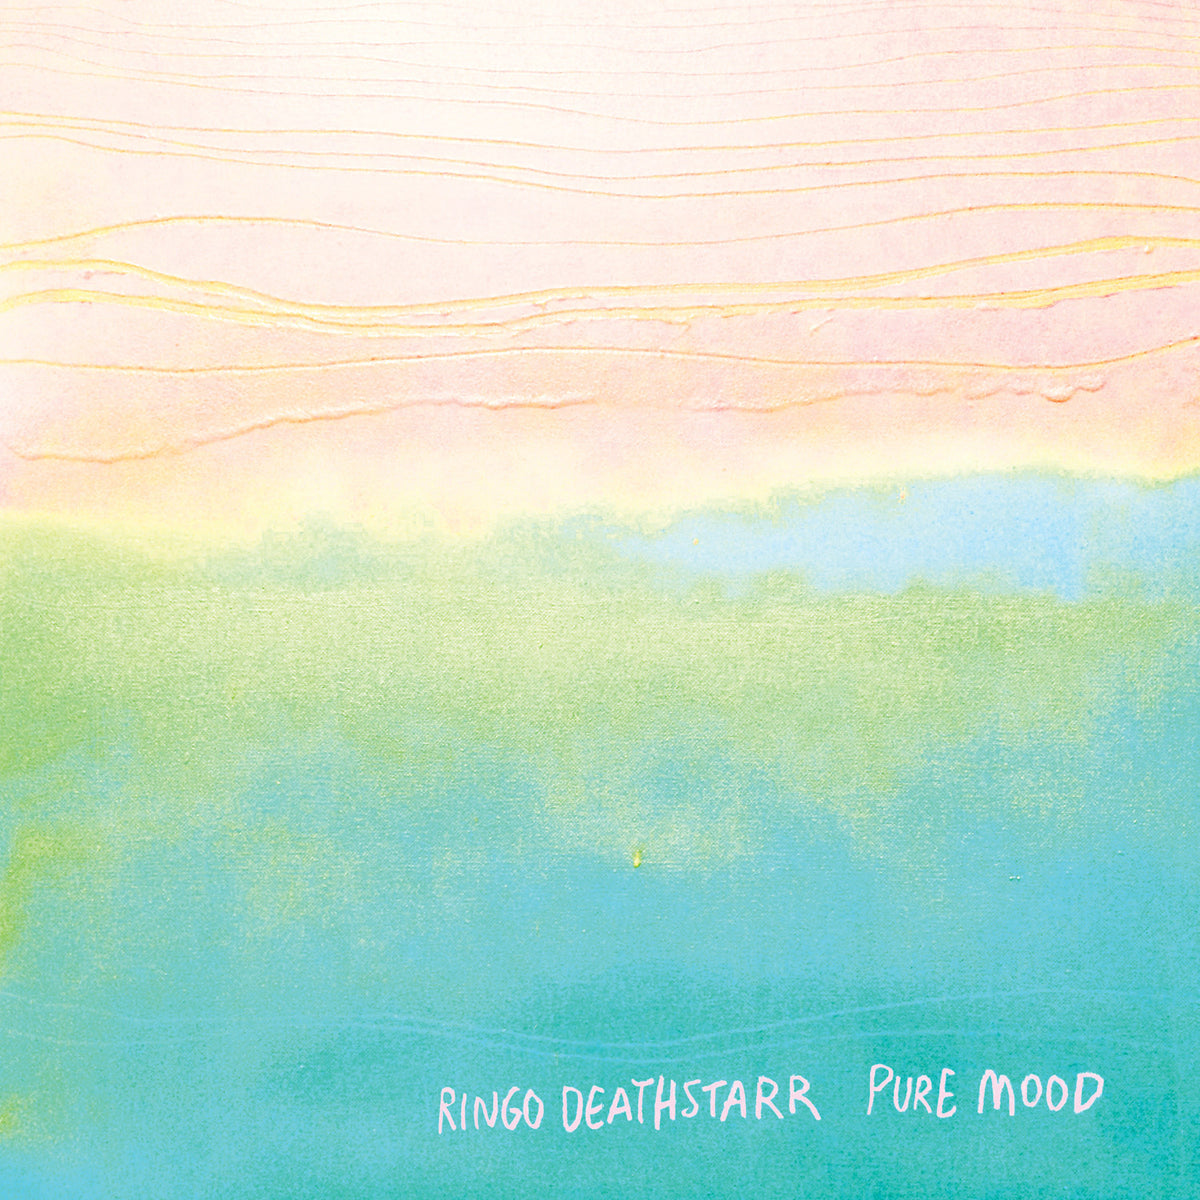 Ringo Deathstarr - Pure Mood LP